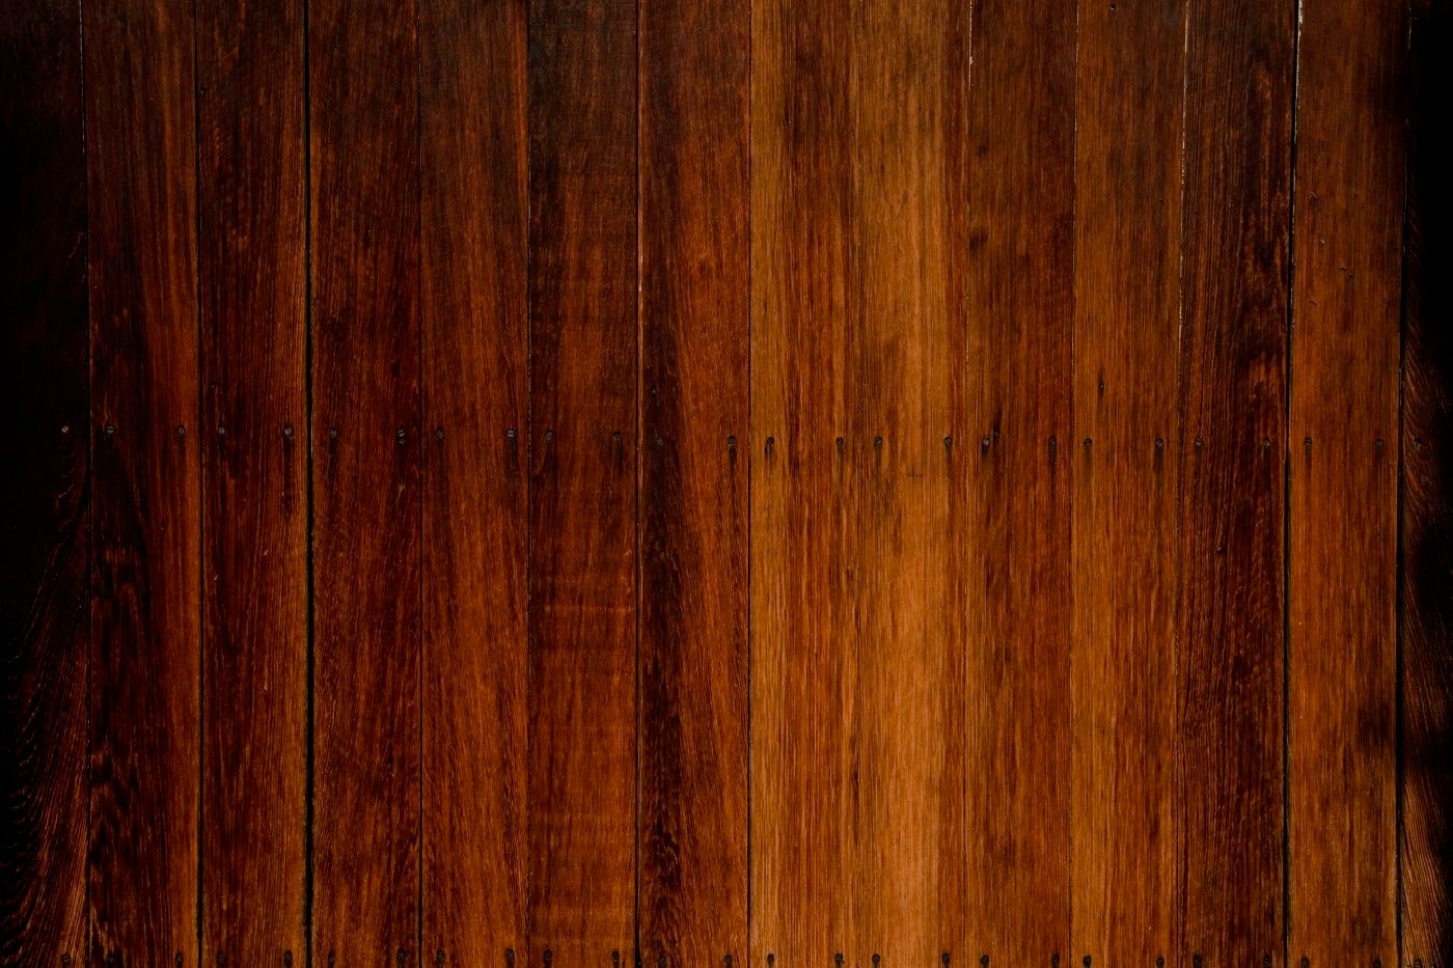 Dark Wood Background iPhone Wallpaper Jpg